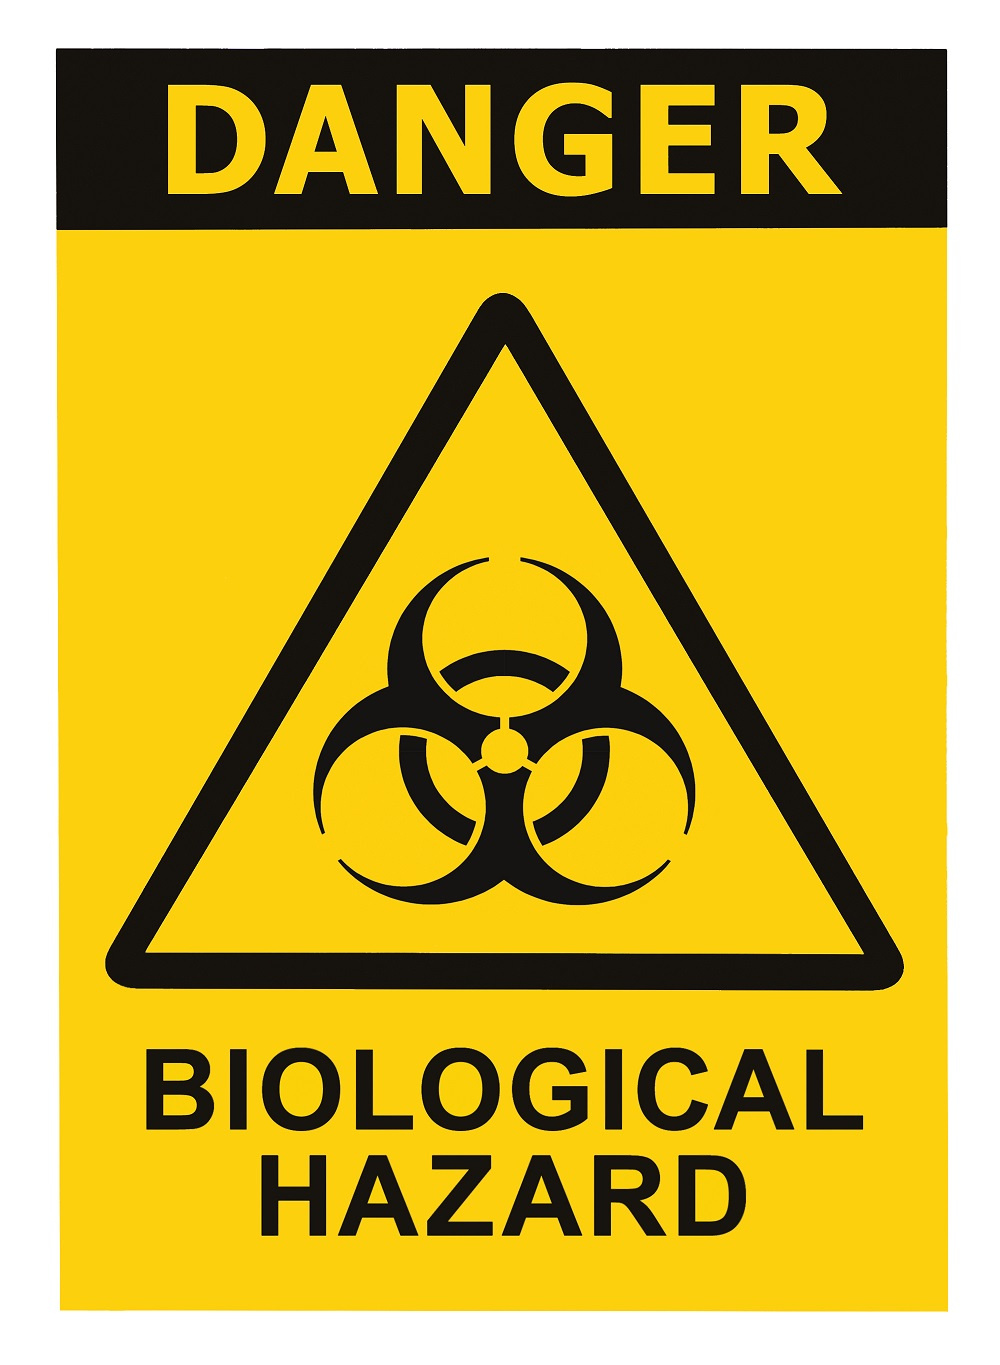 Biological hazard sign